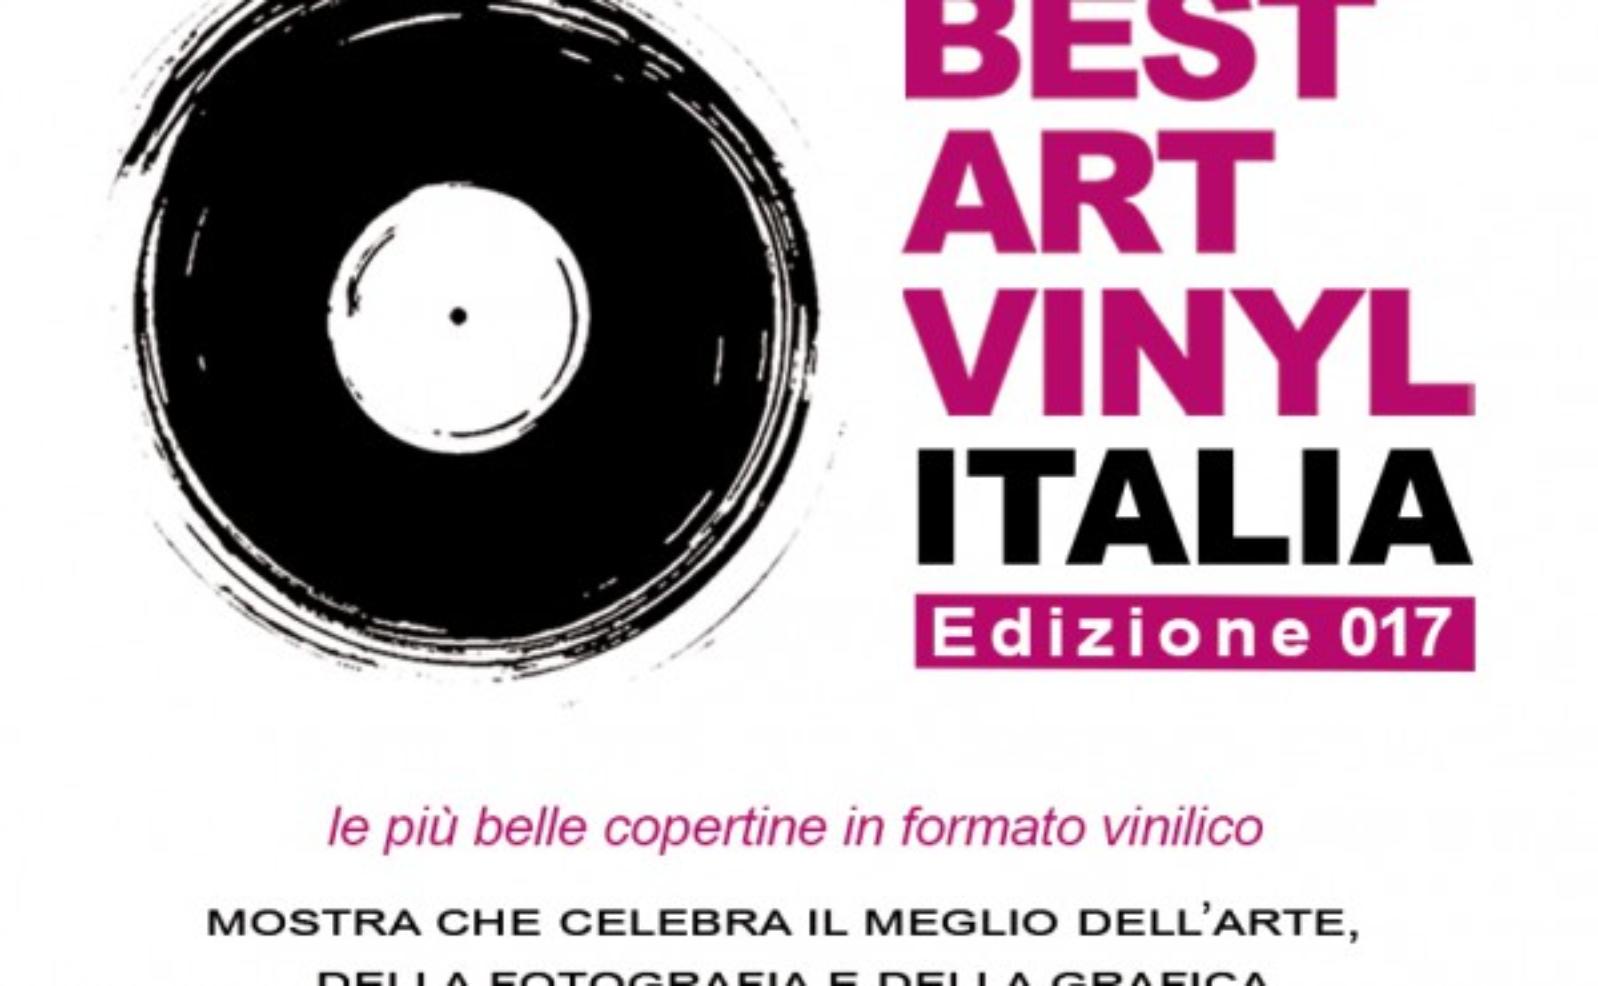 Best Art Vinyl Italia Exhibition & Record Store Day